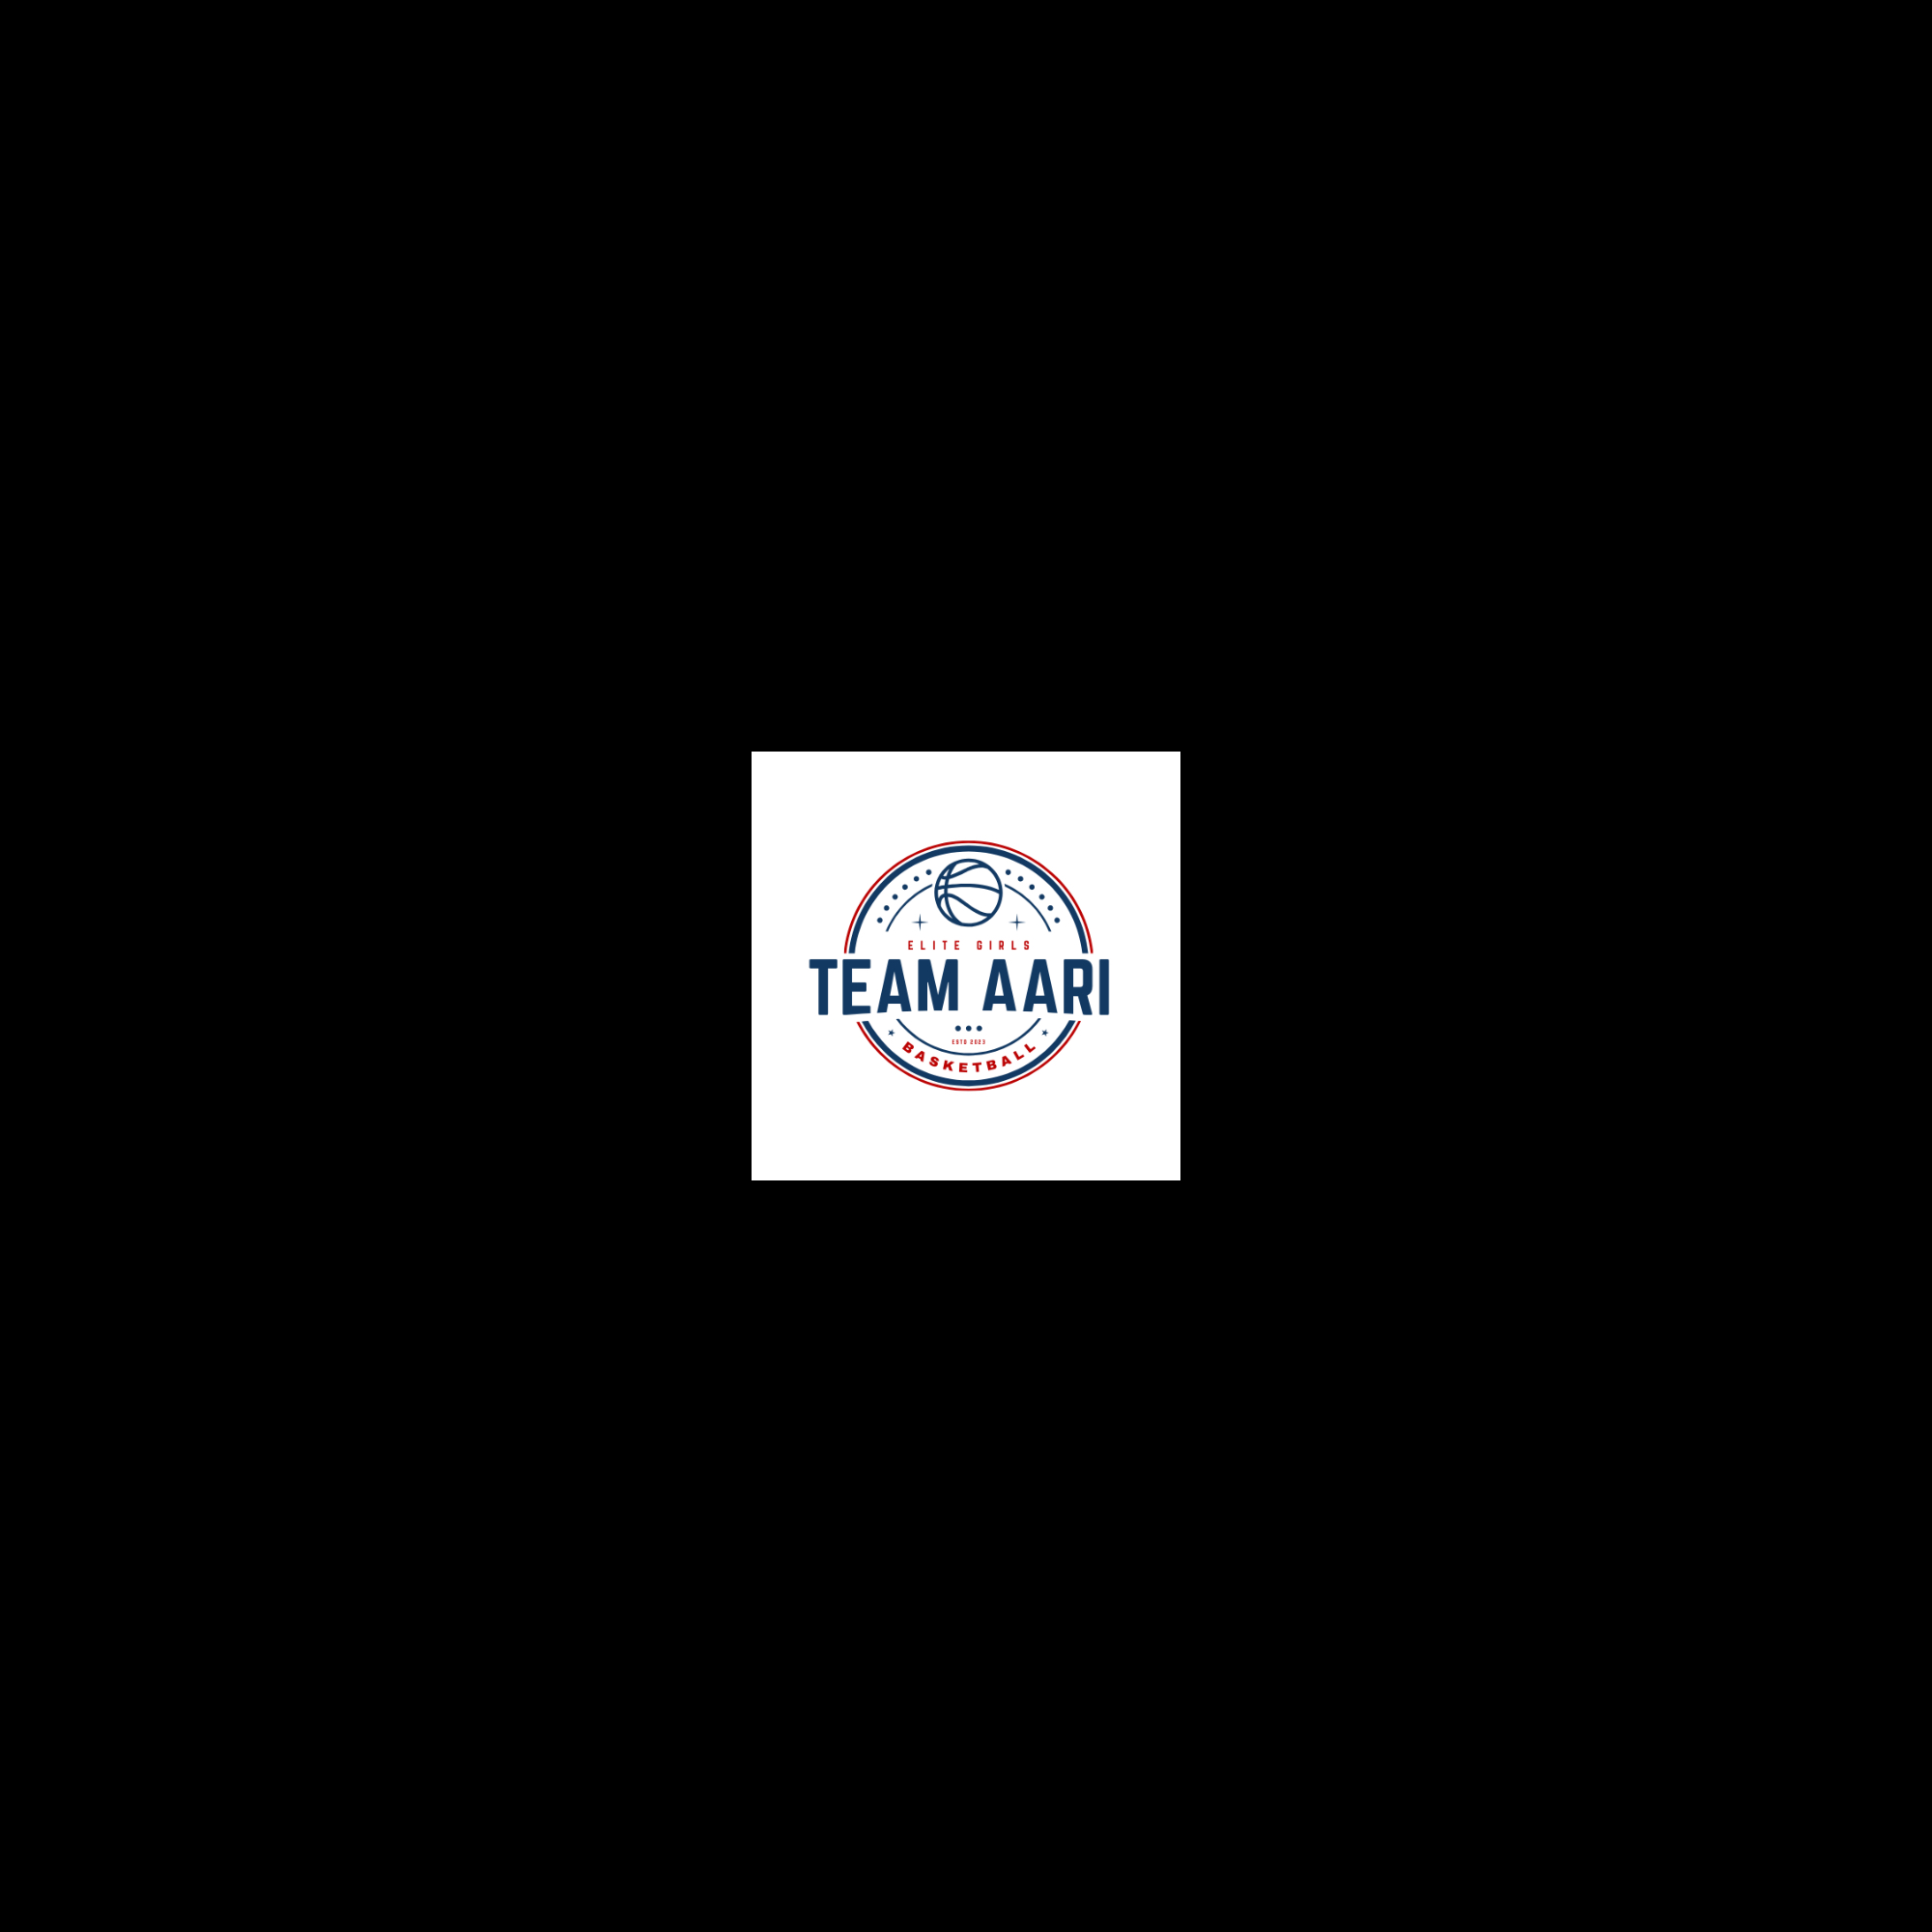 The official logo of TEAM AARI